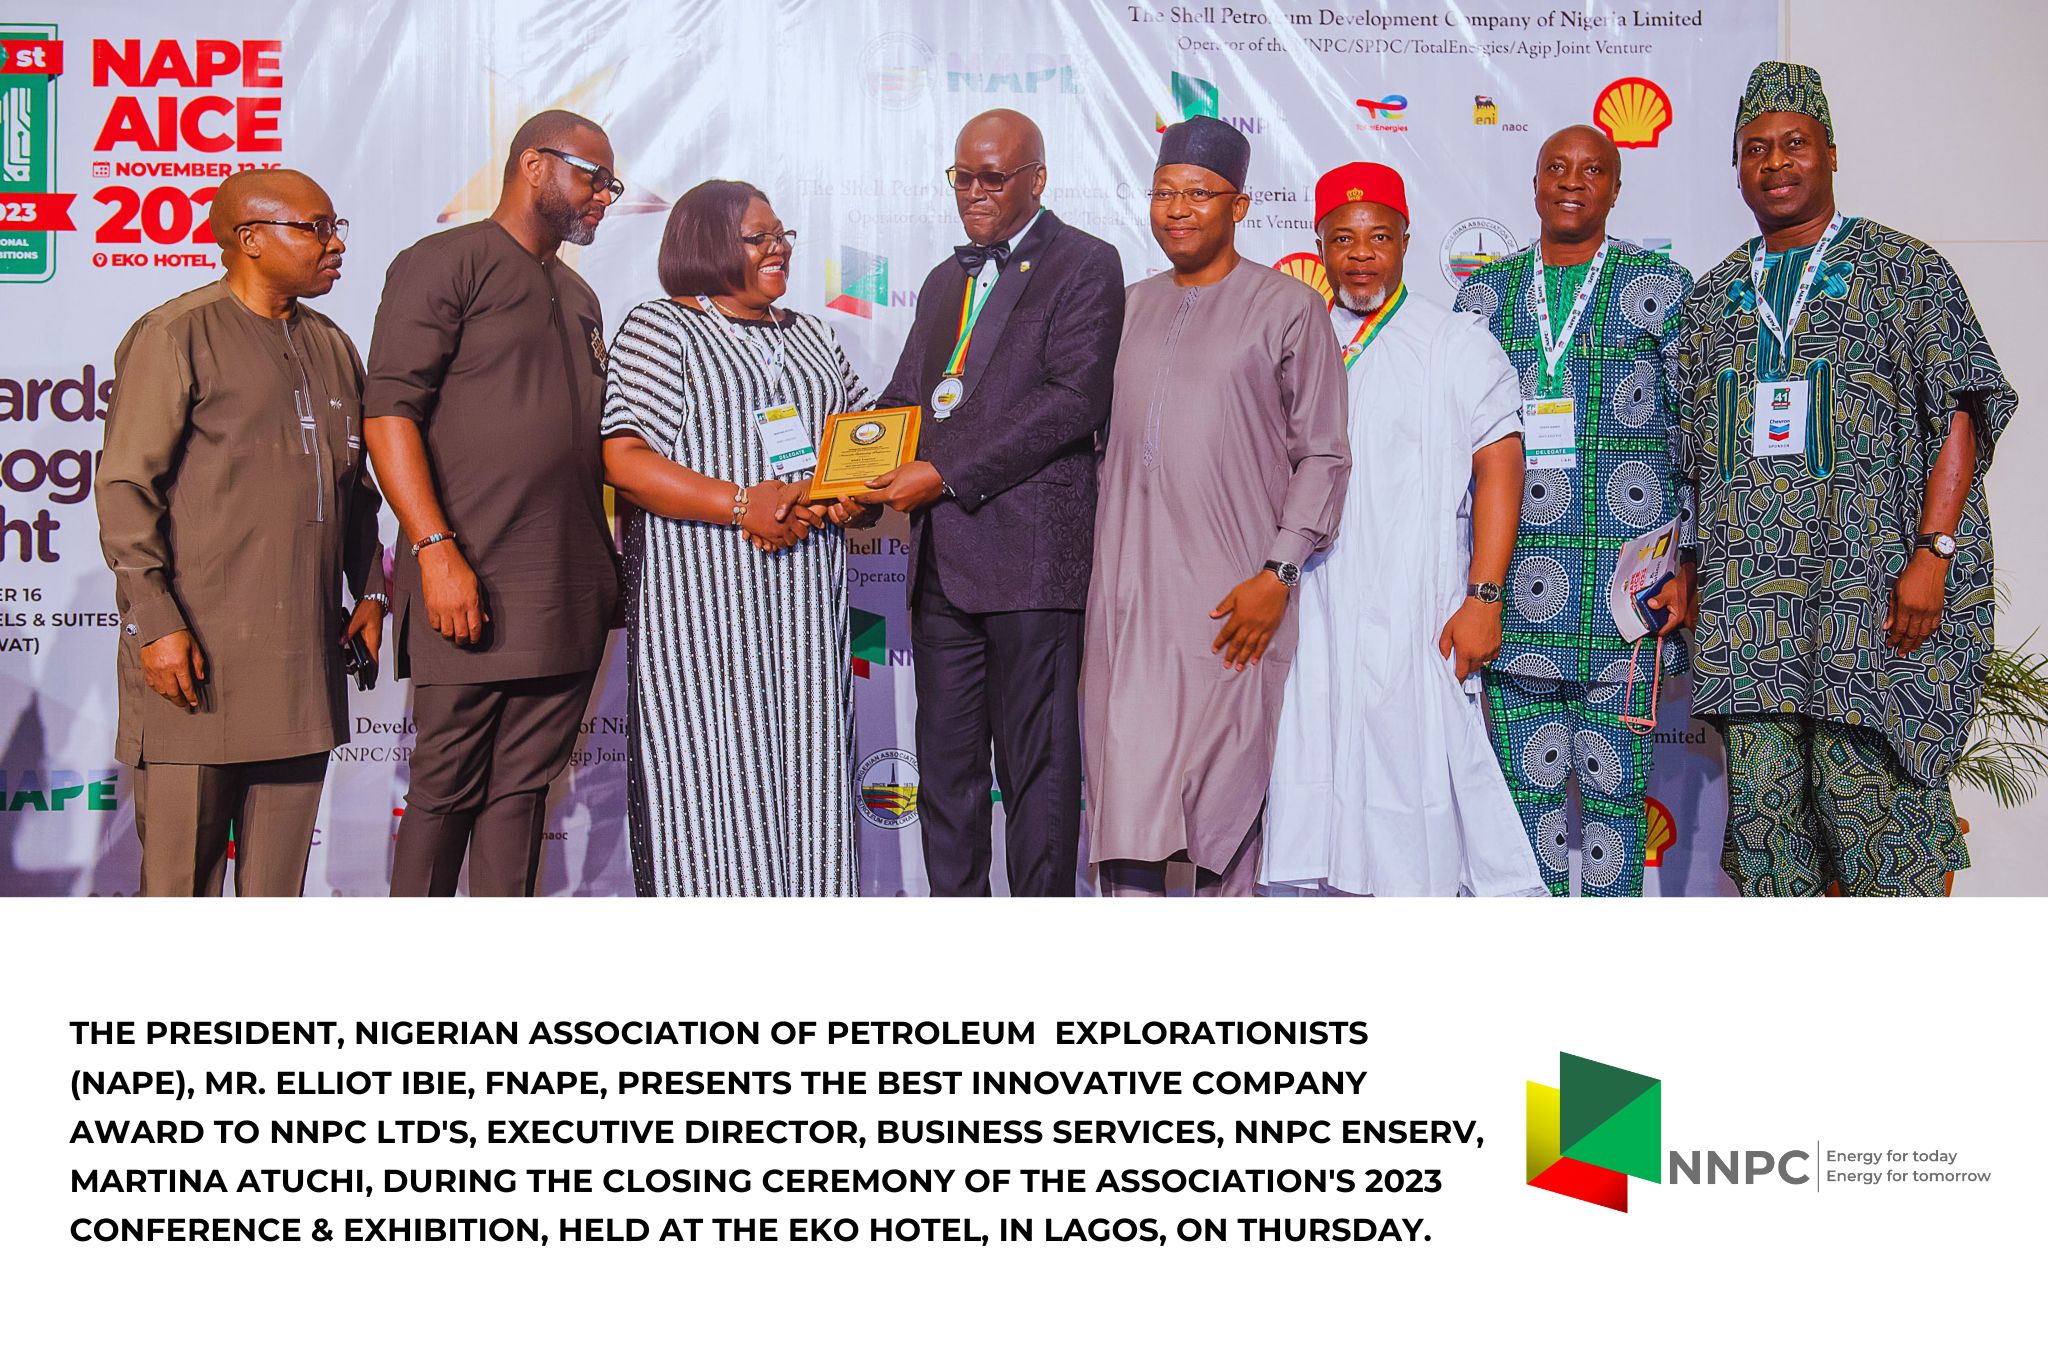 41st Nigerian Association of Petroleum Explorationists (NAPE) Annual International Conference & Exhibition.